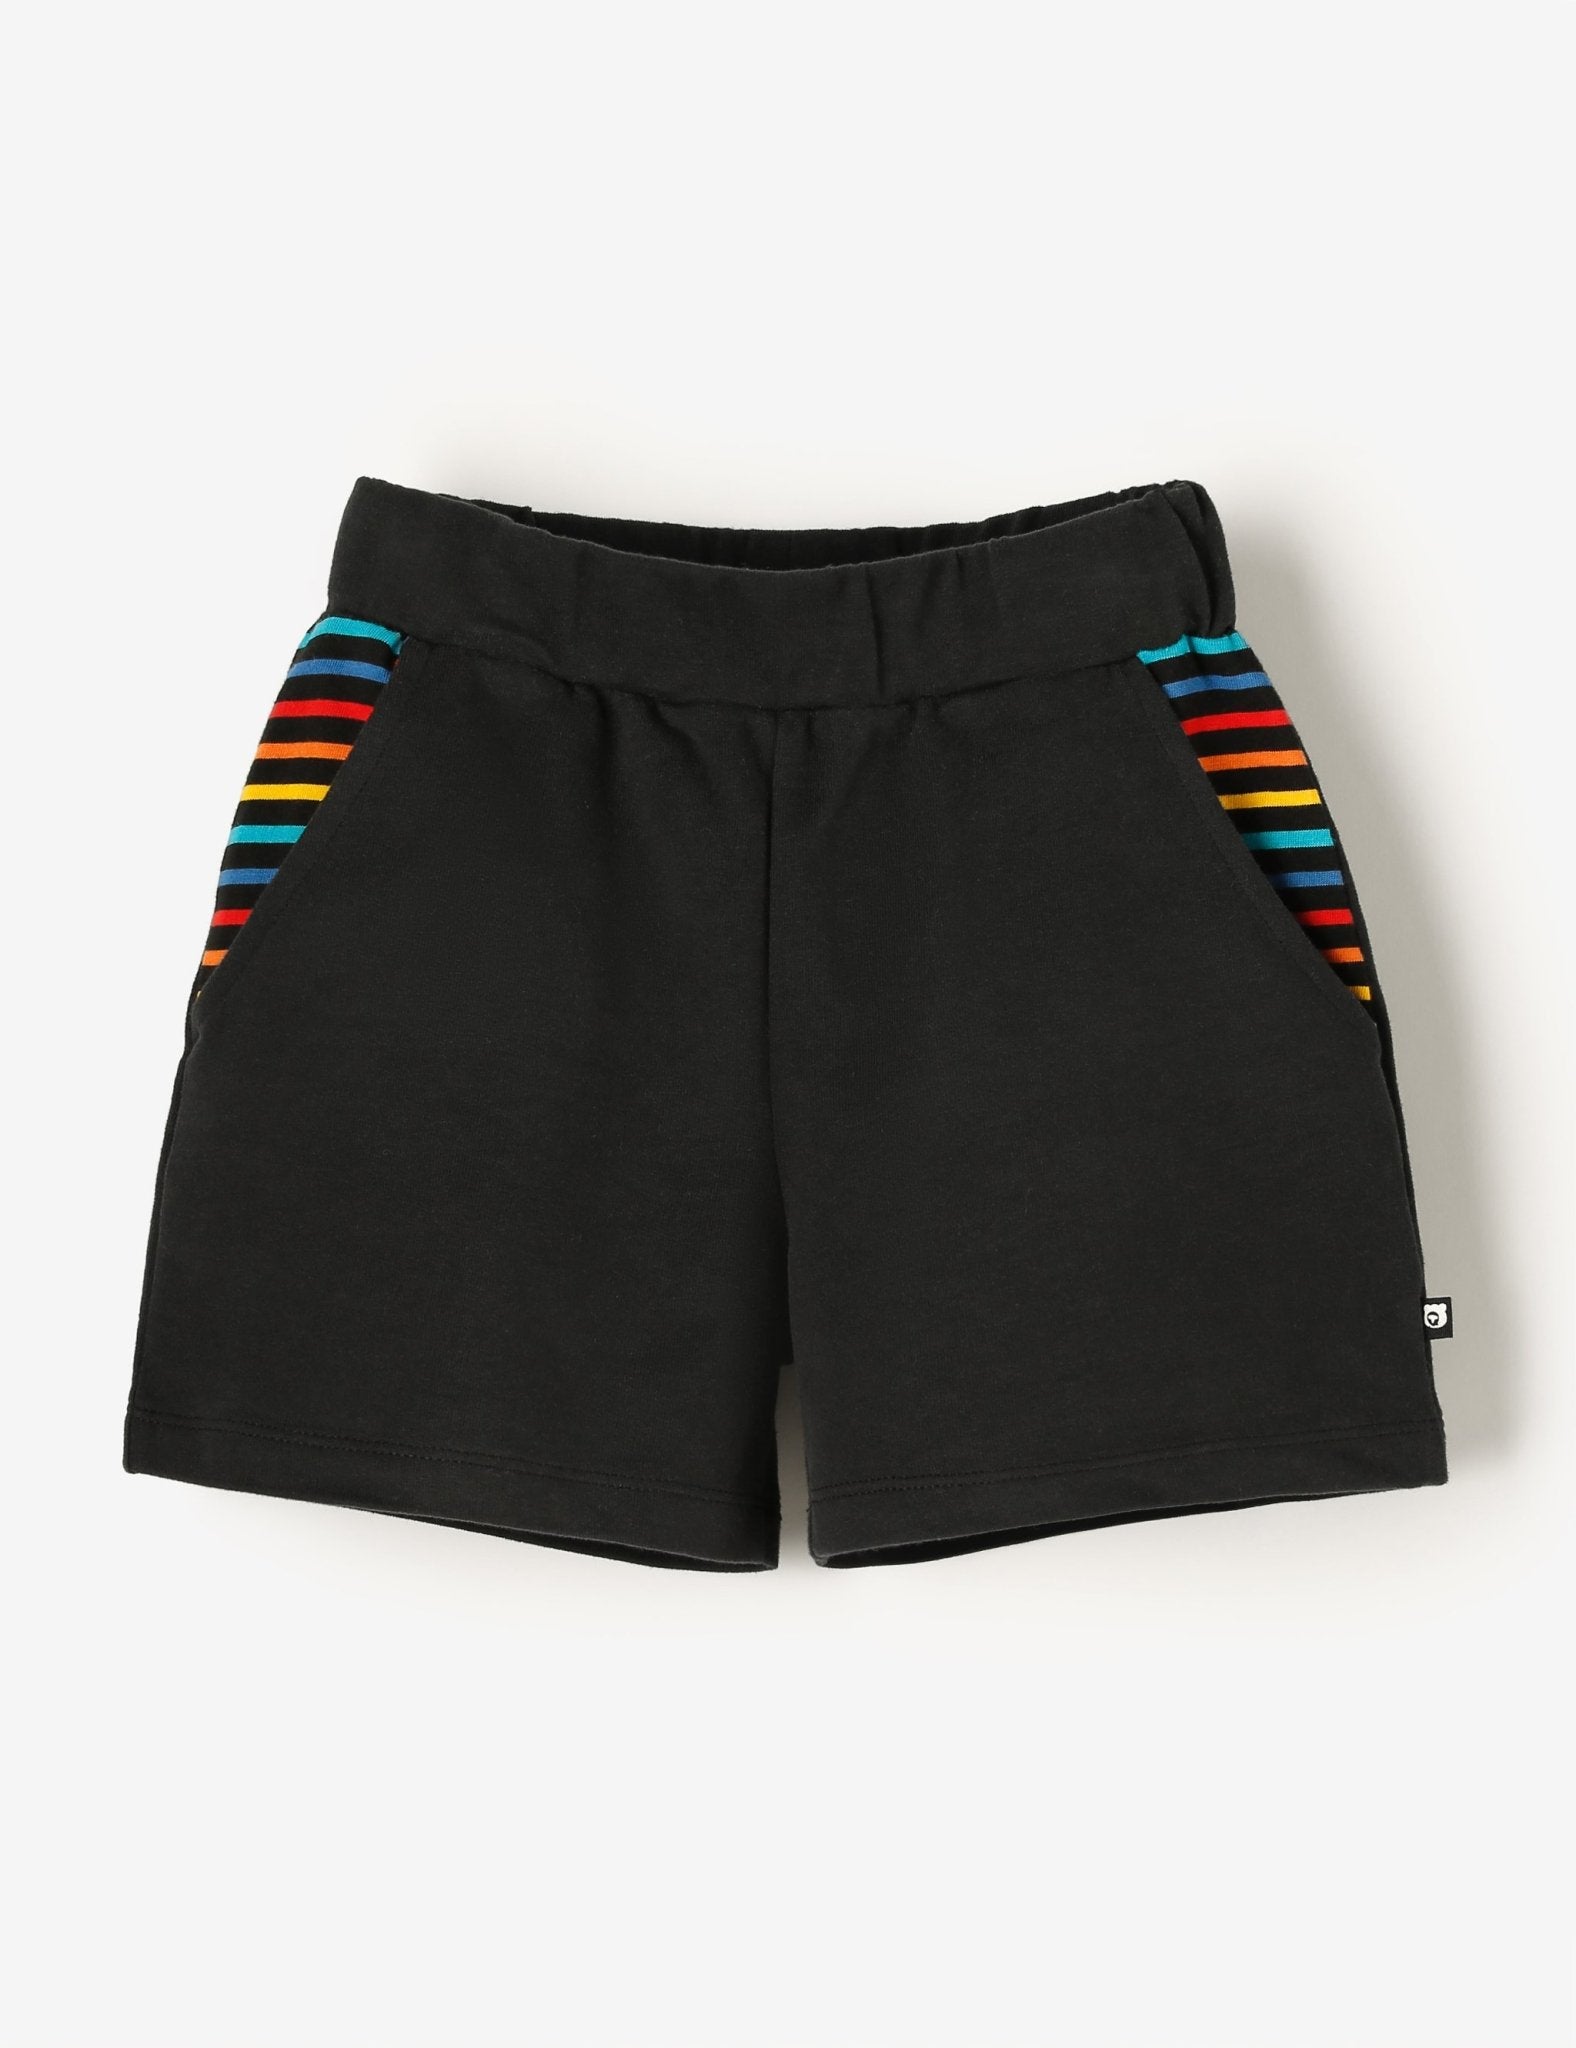 Bermuda Shorts - Black Ink - The QT